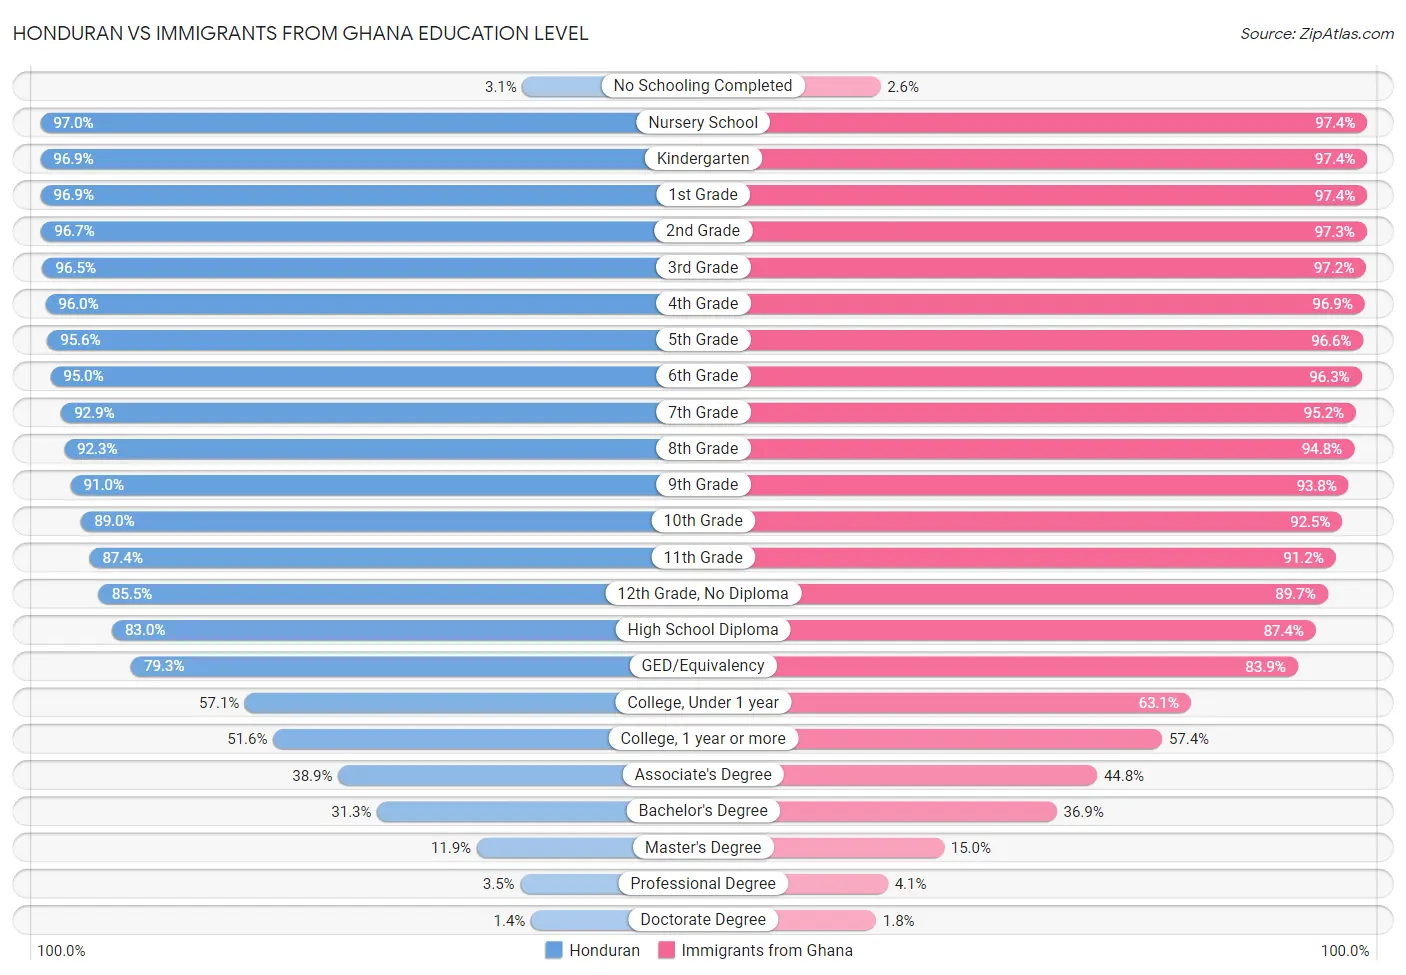 Honduran vs Immigrants from Ghana Education Level